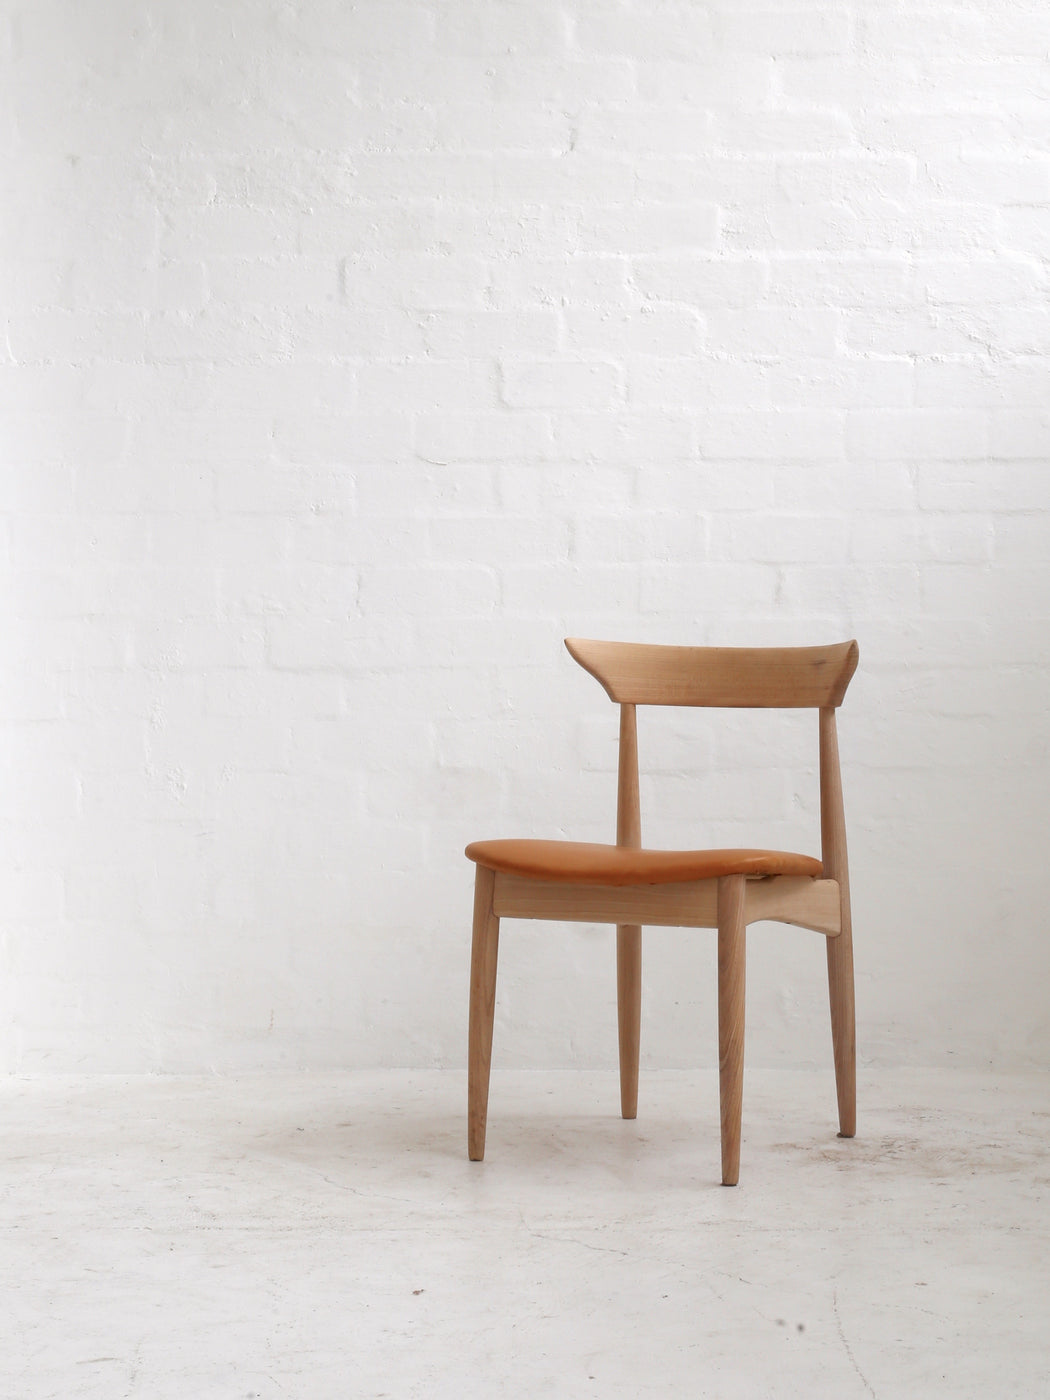 Danish Elm Chair by P.E. Jorgensen